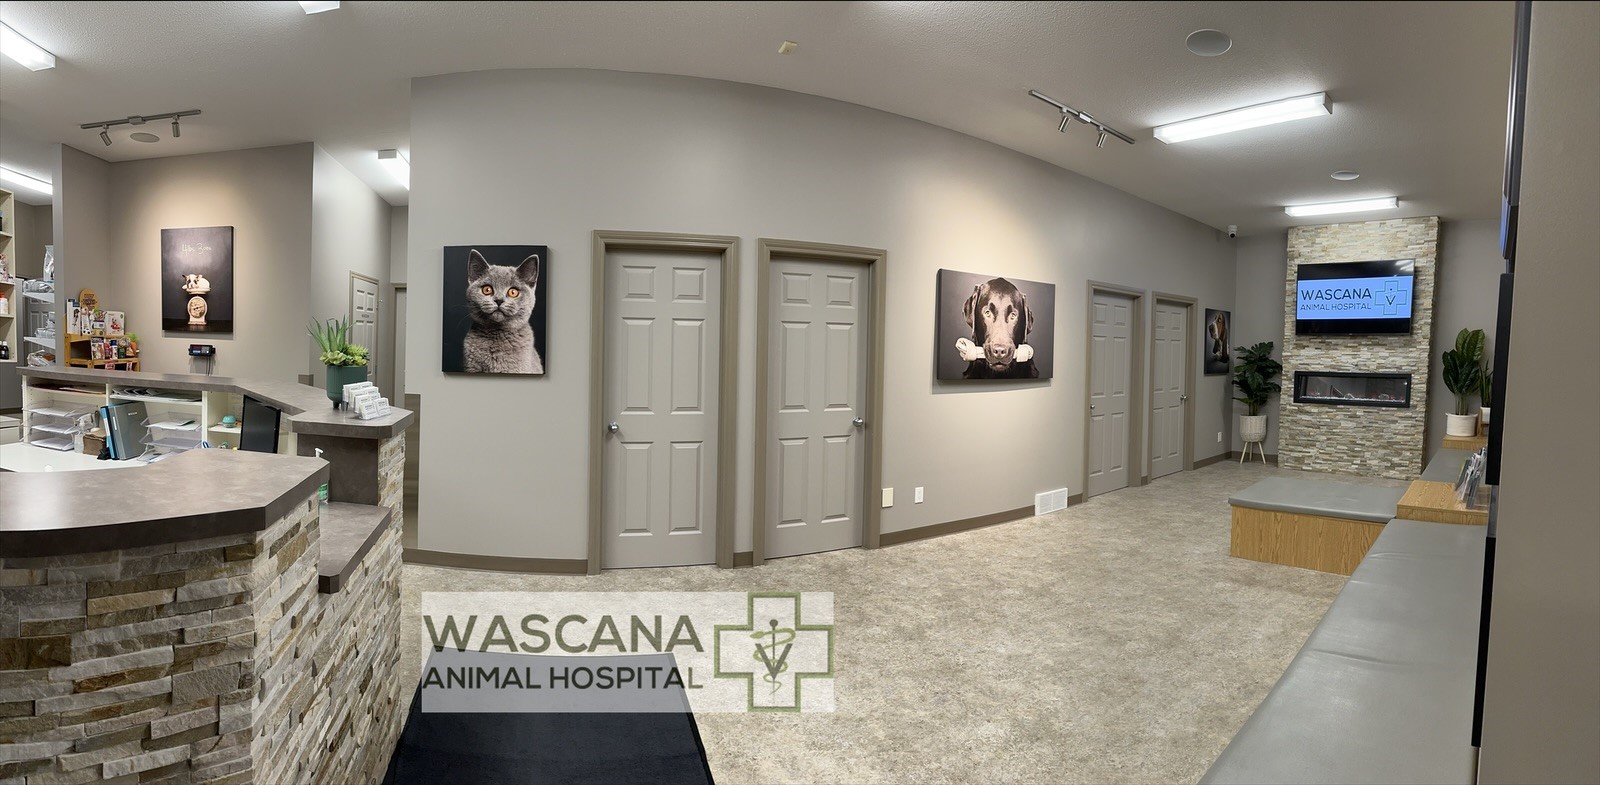 Wascana Animal Hospital